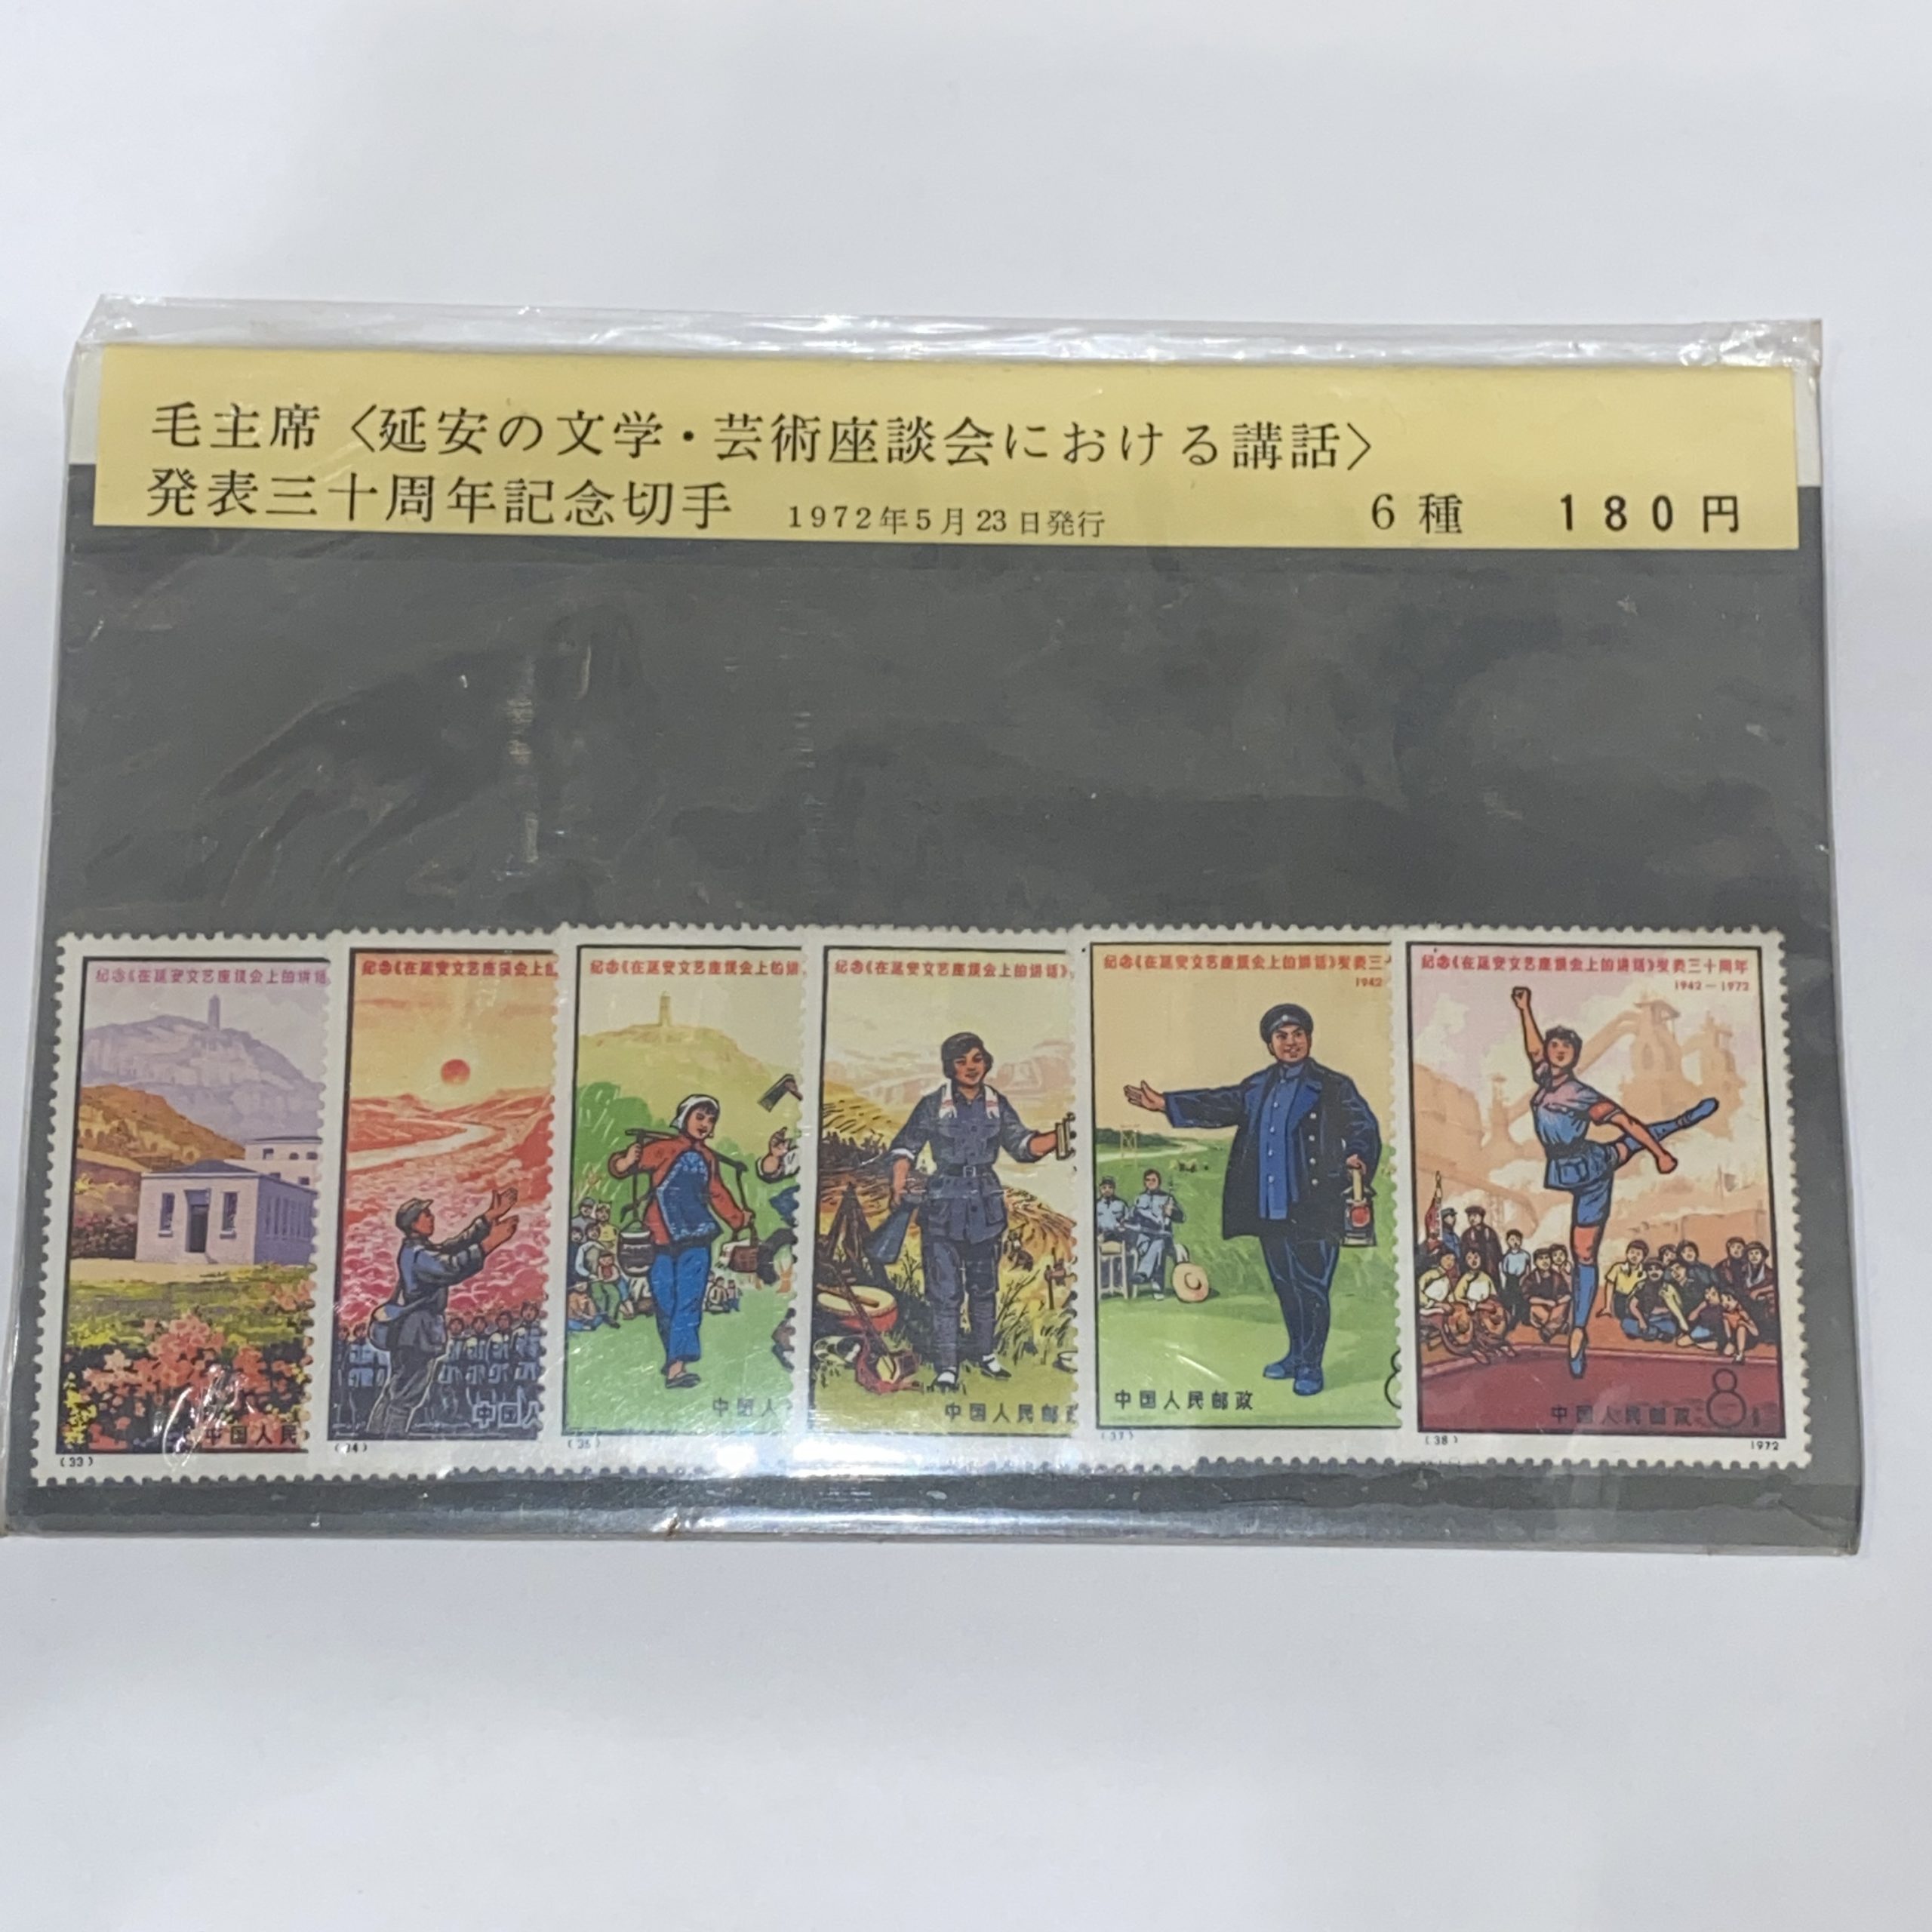 【中国切手】毛主席〈延安の文学・芸術座談会における講話〉発表三十周年記念切手 1972年5月23日発行 6種完